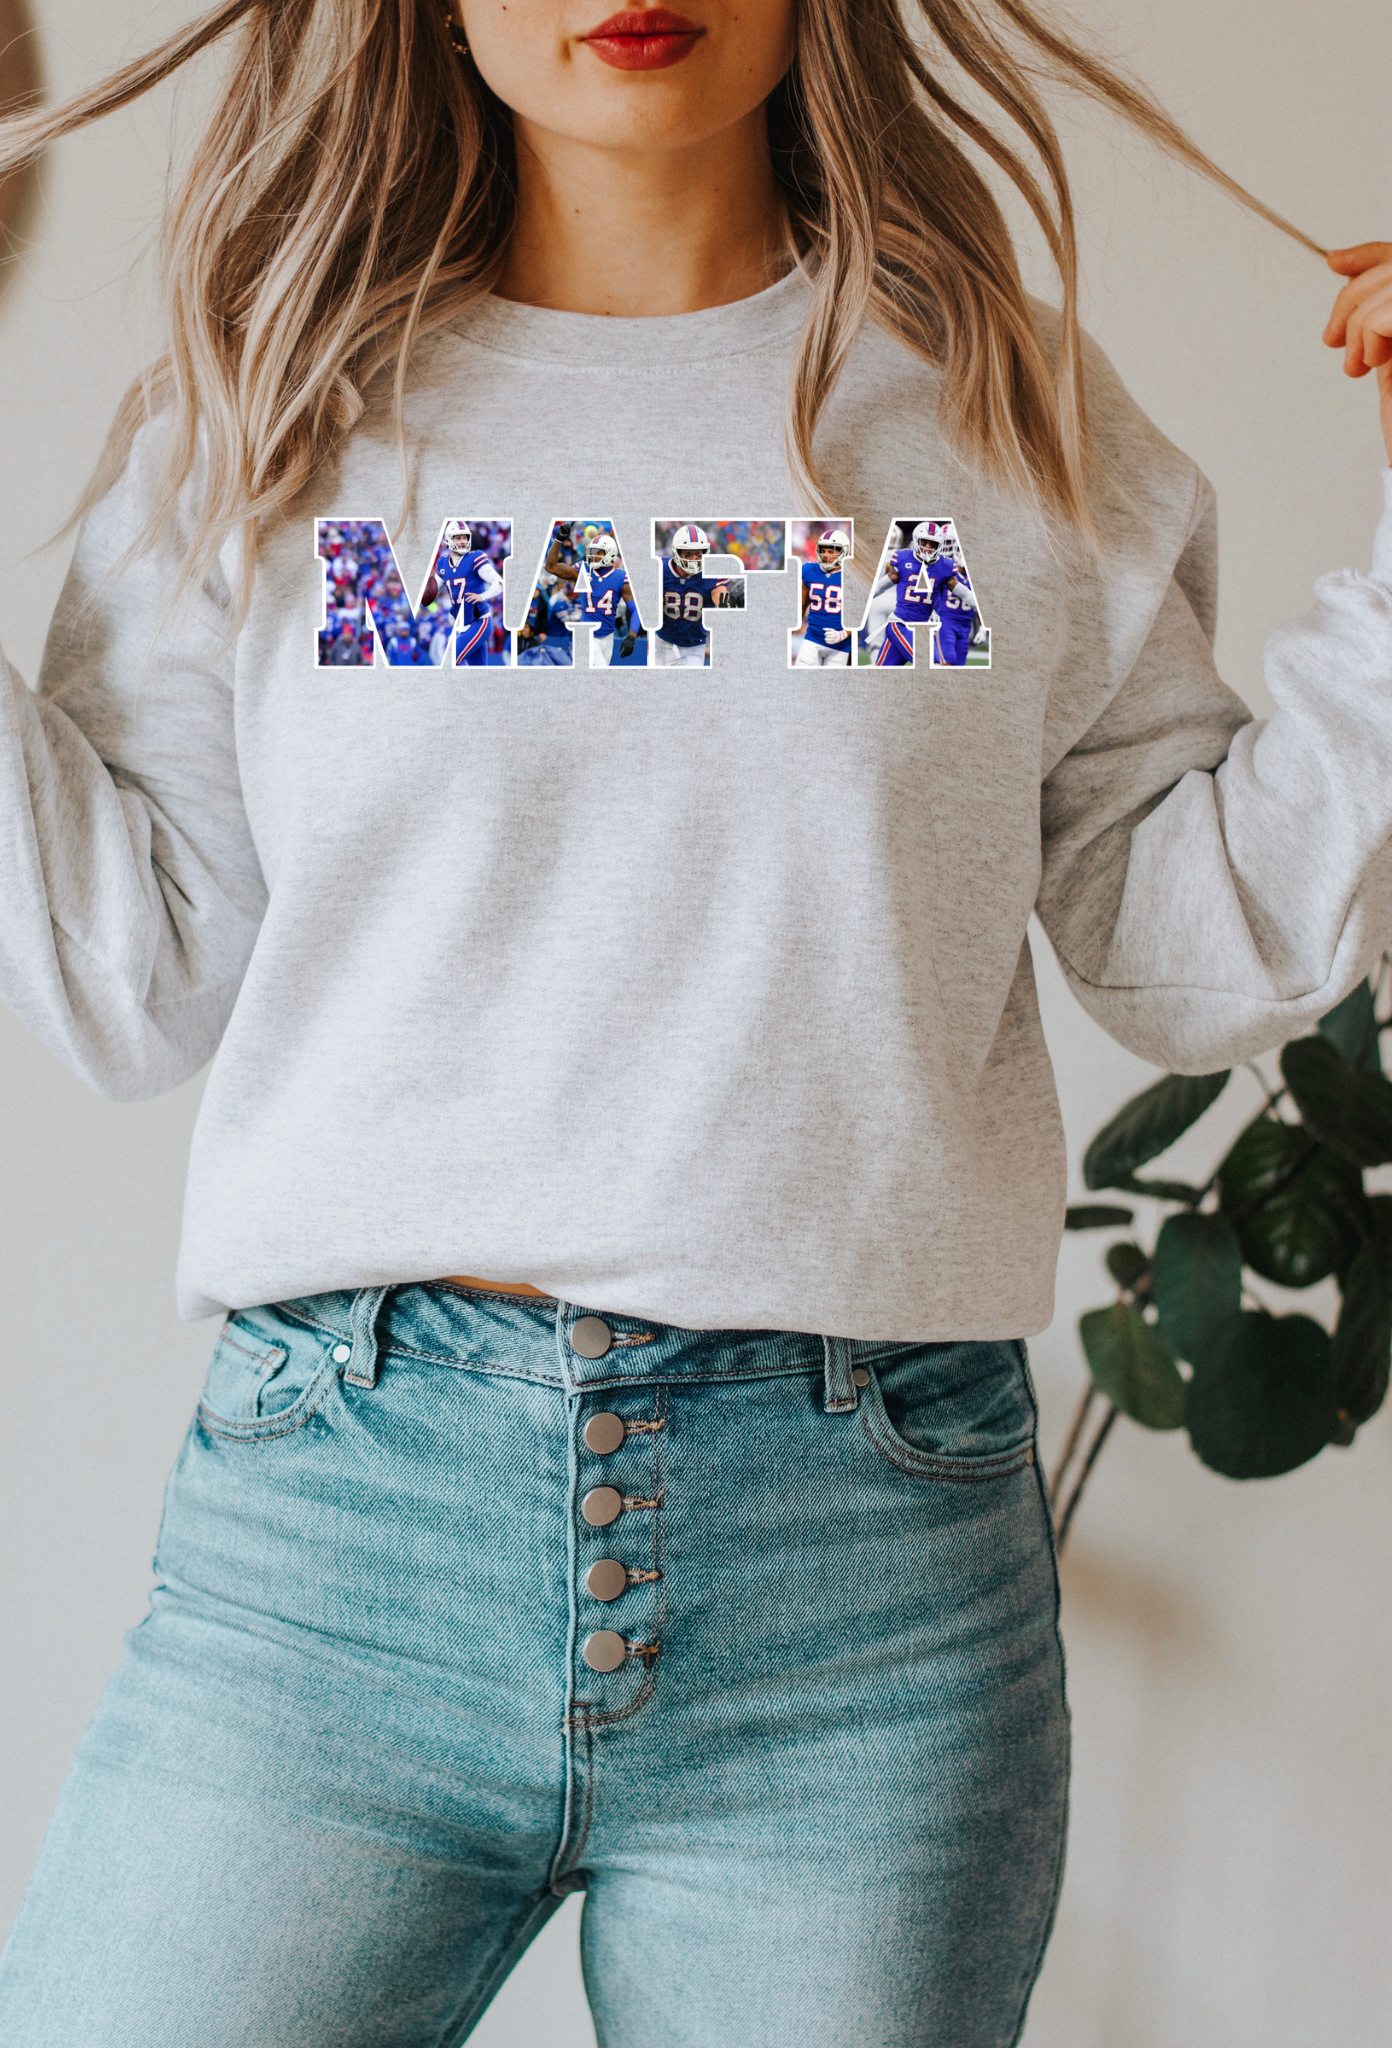 Mafia star players hoodie, MAFIA hoodie, MAFIA players crewneck